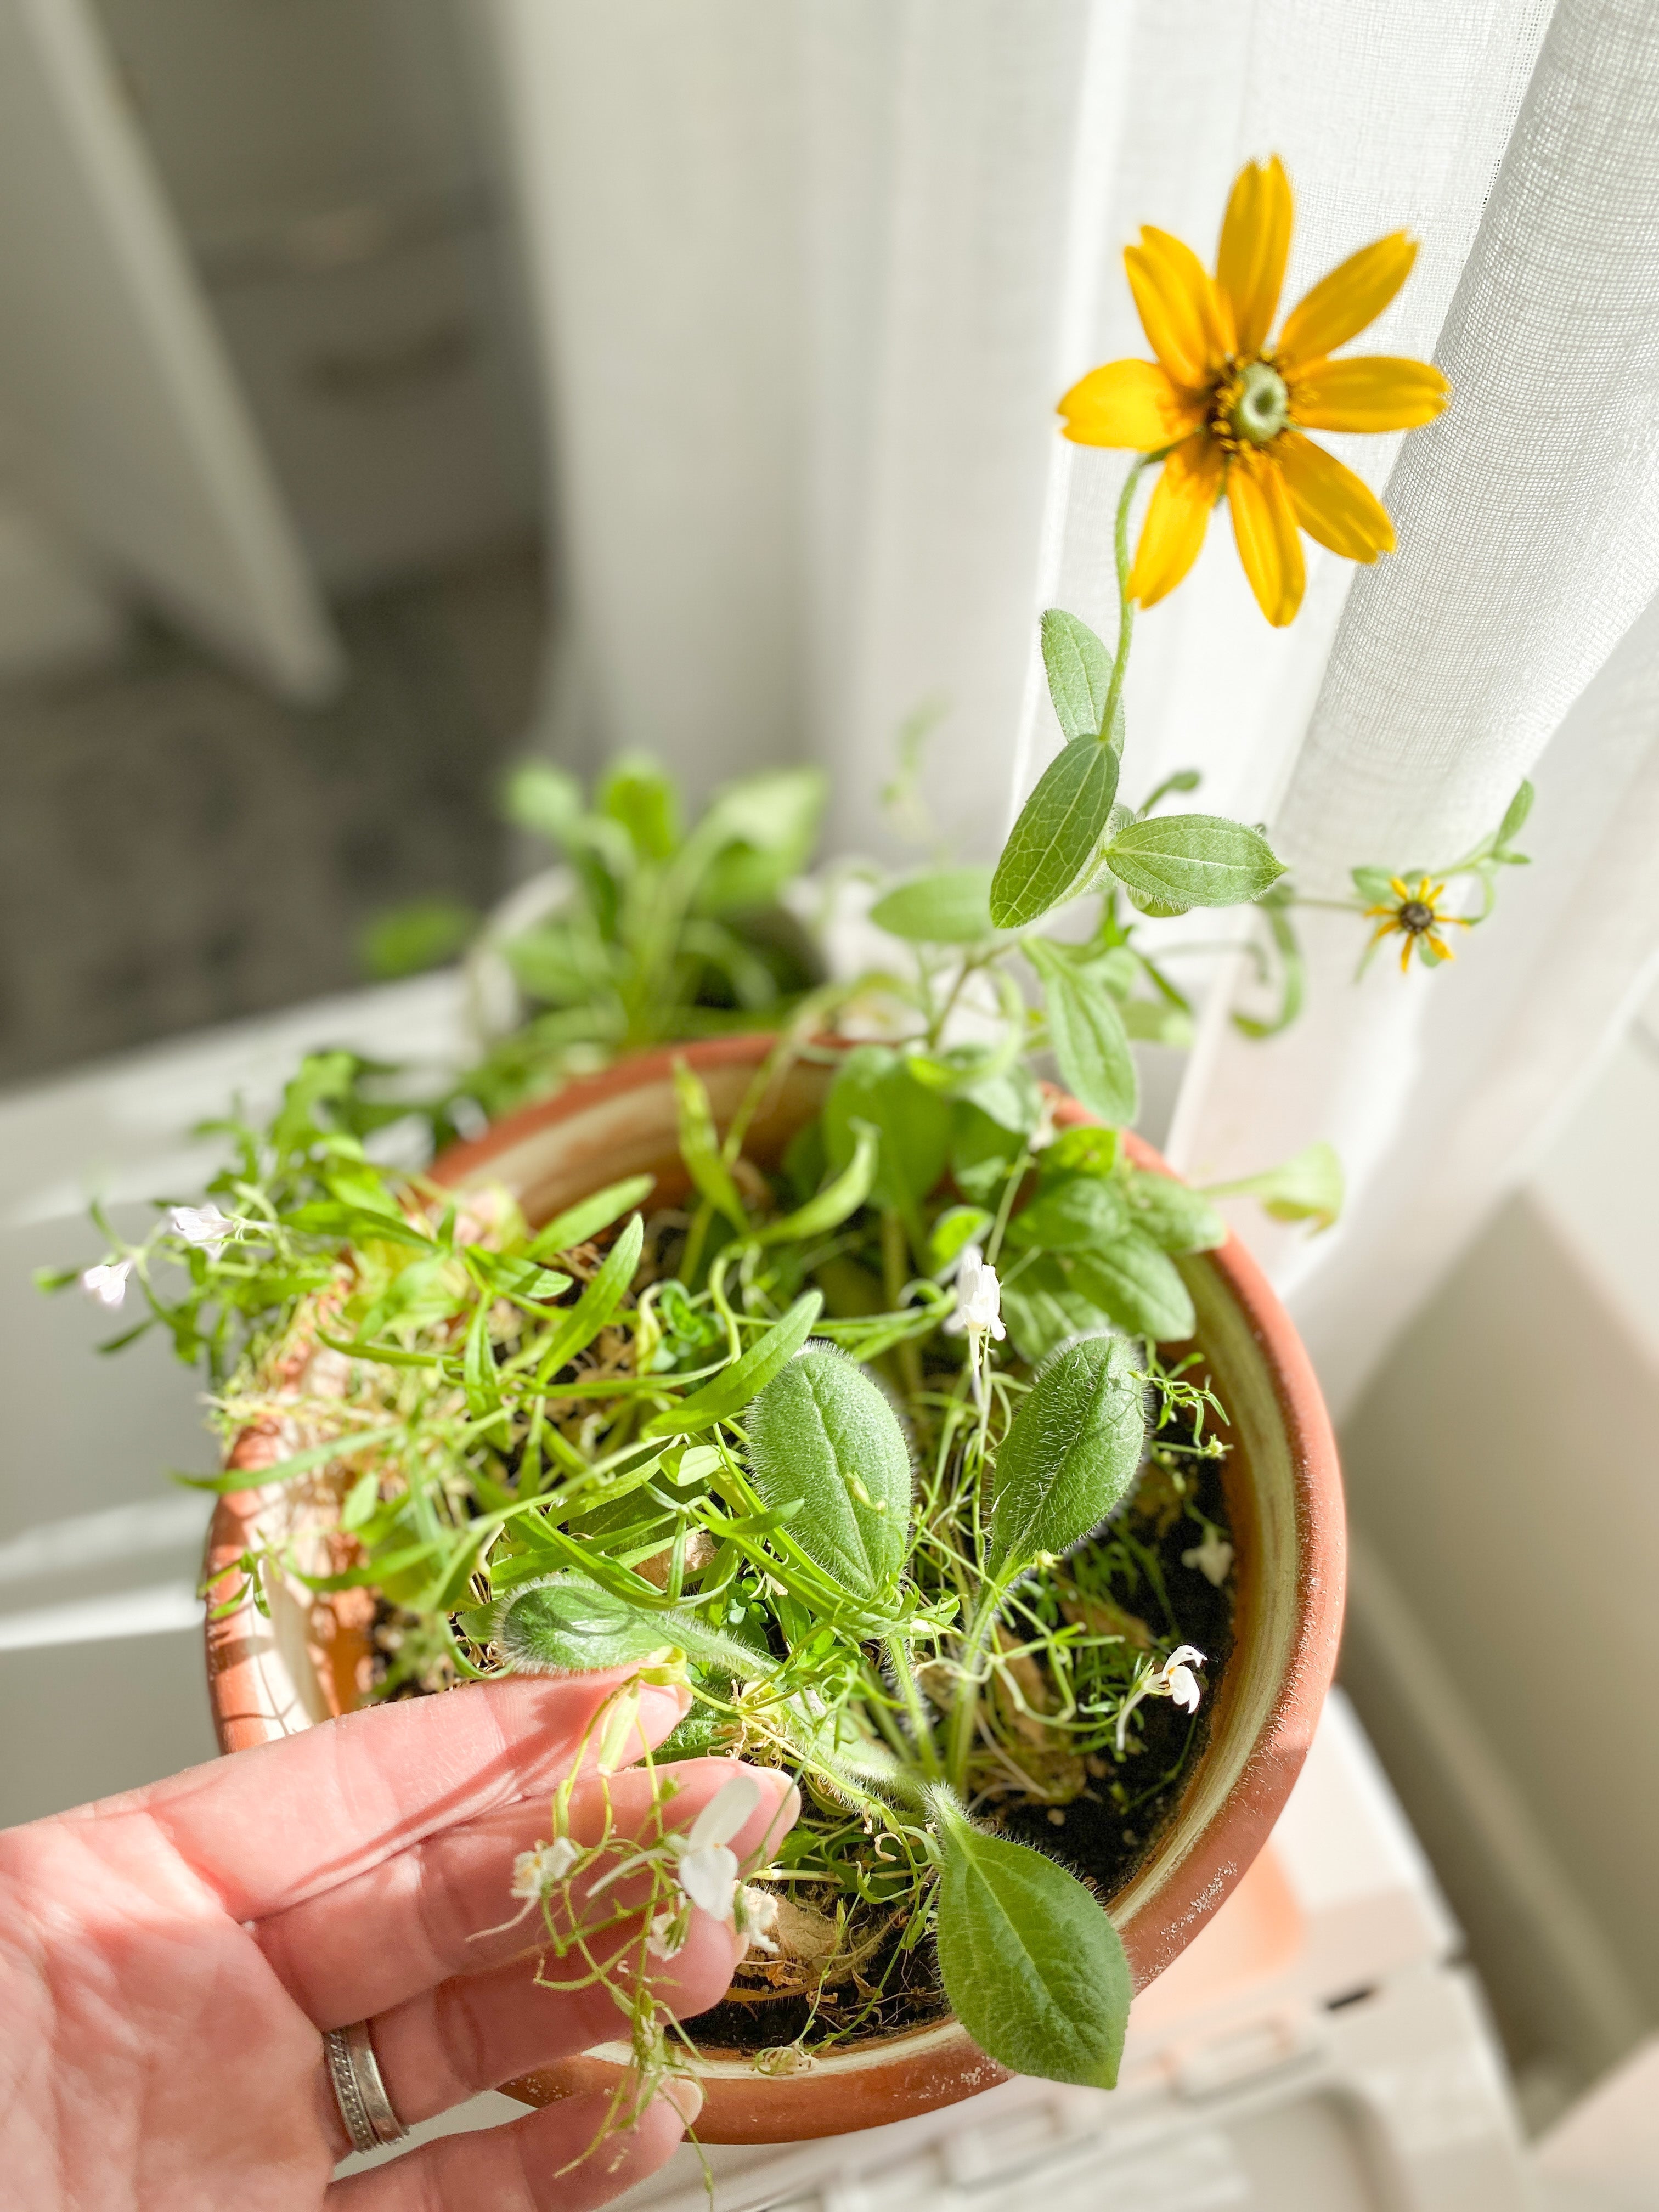 growNOTES™ Wildflower Baby Shower Plantable Invitation - Wildflower Wreath